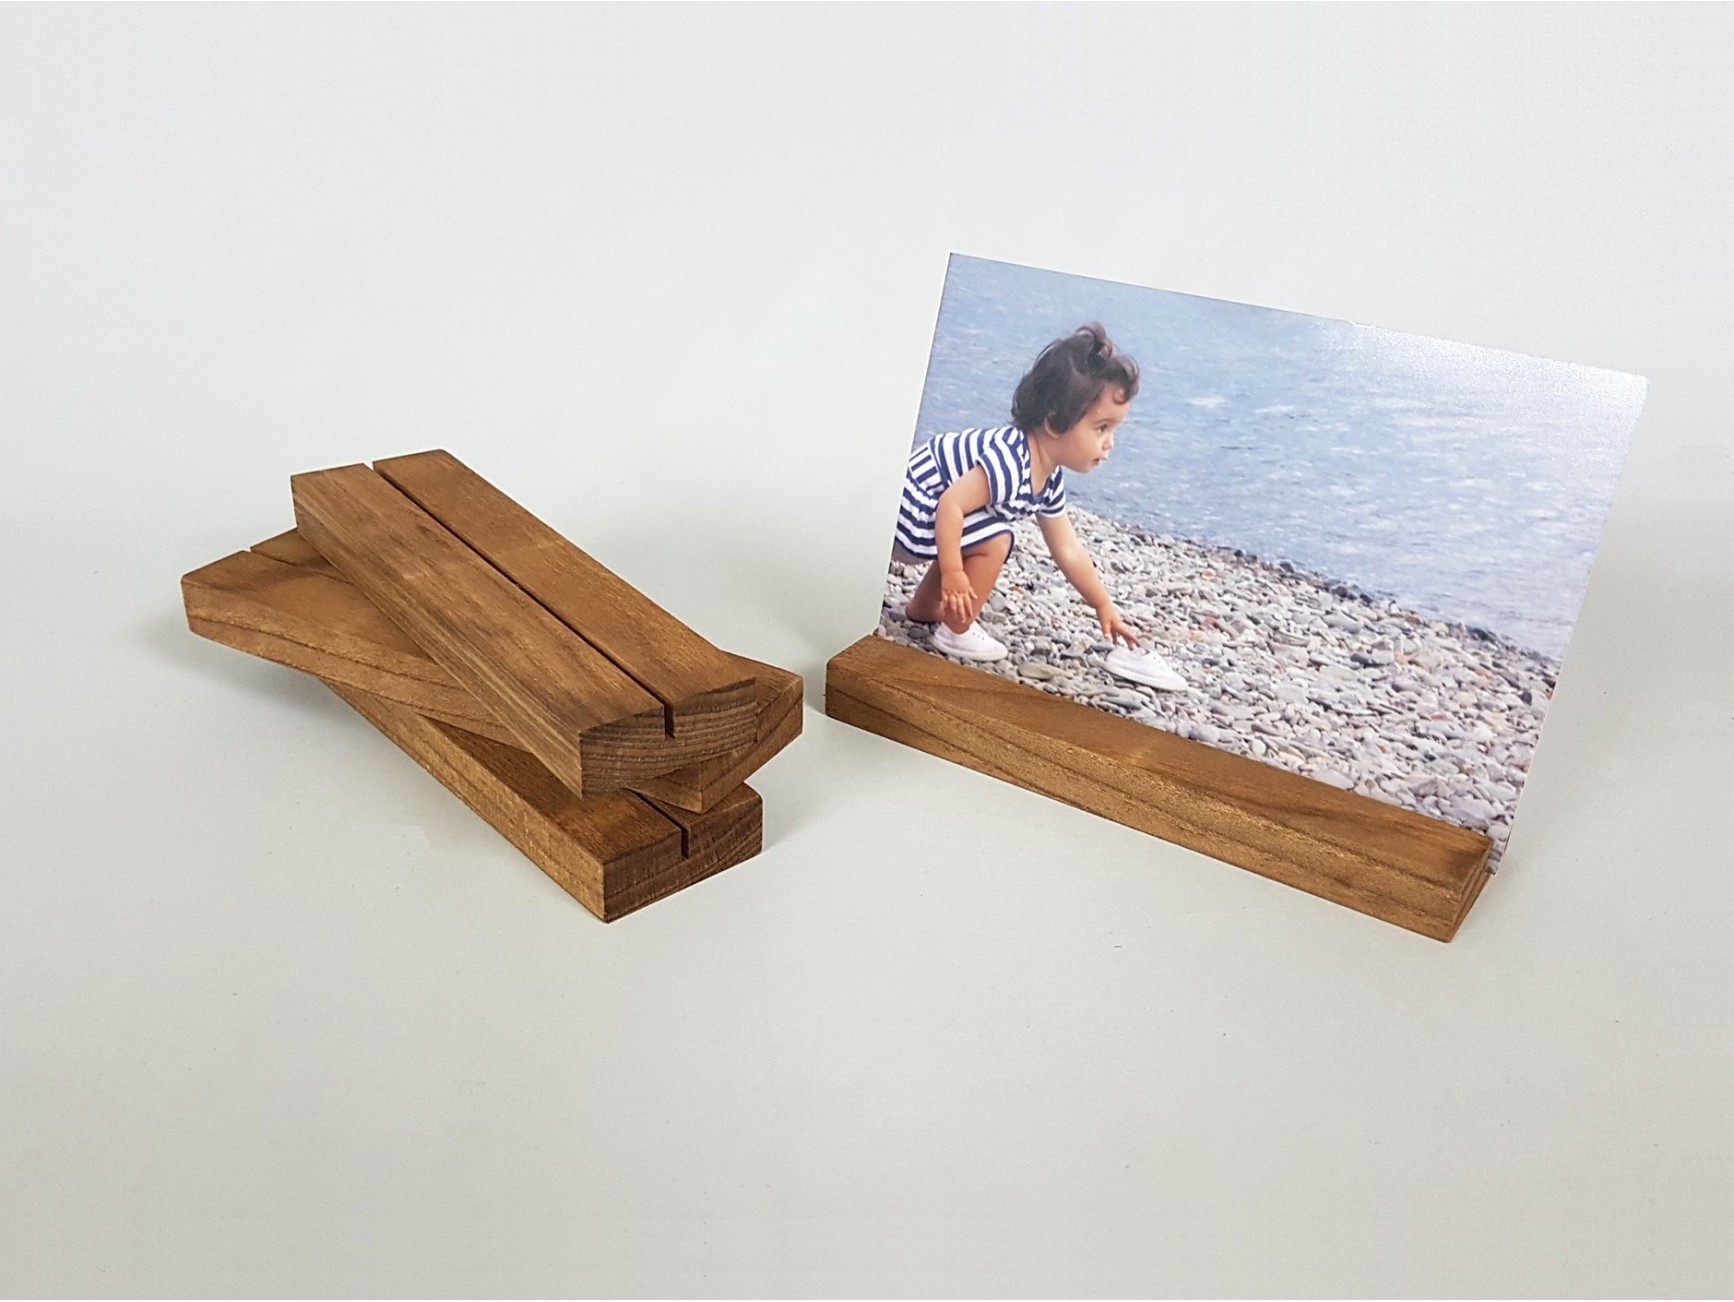 Taco de madera Natural 7x5x2 cm. Ref.P1006 - Mabaonline